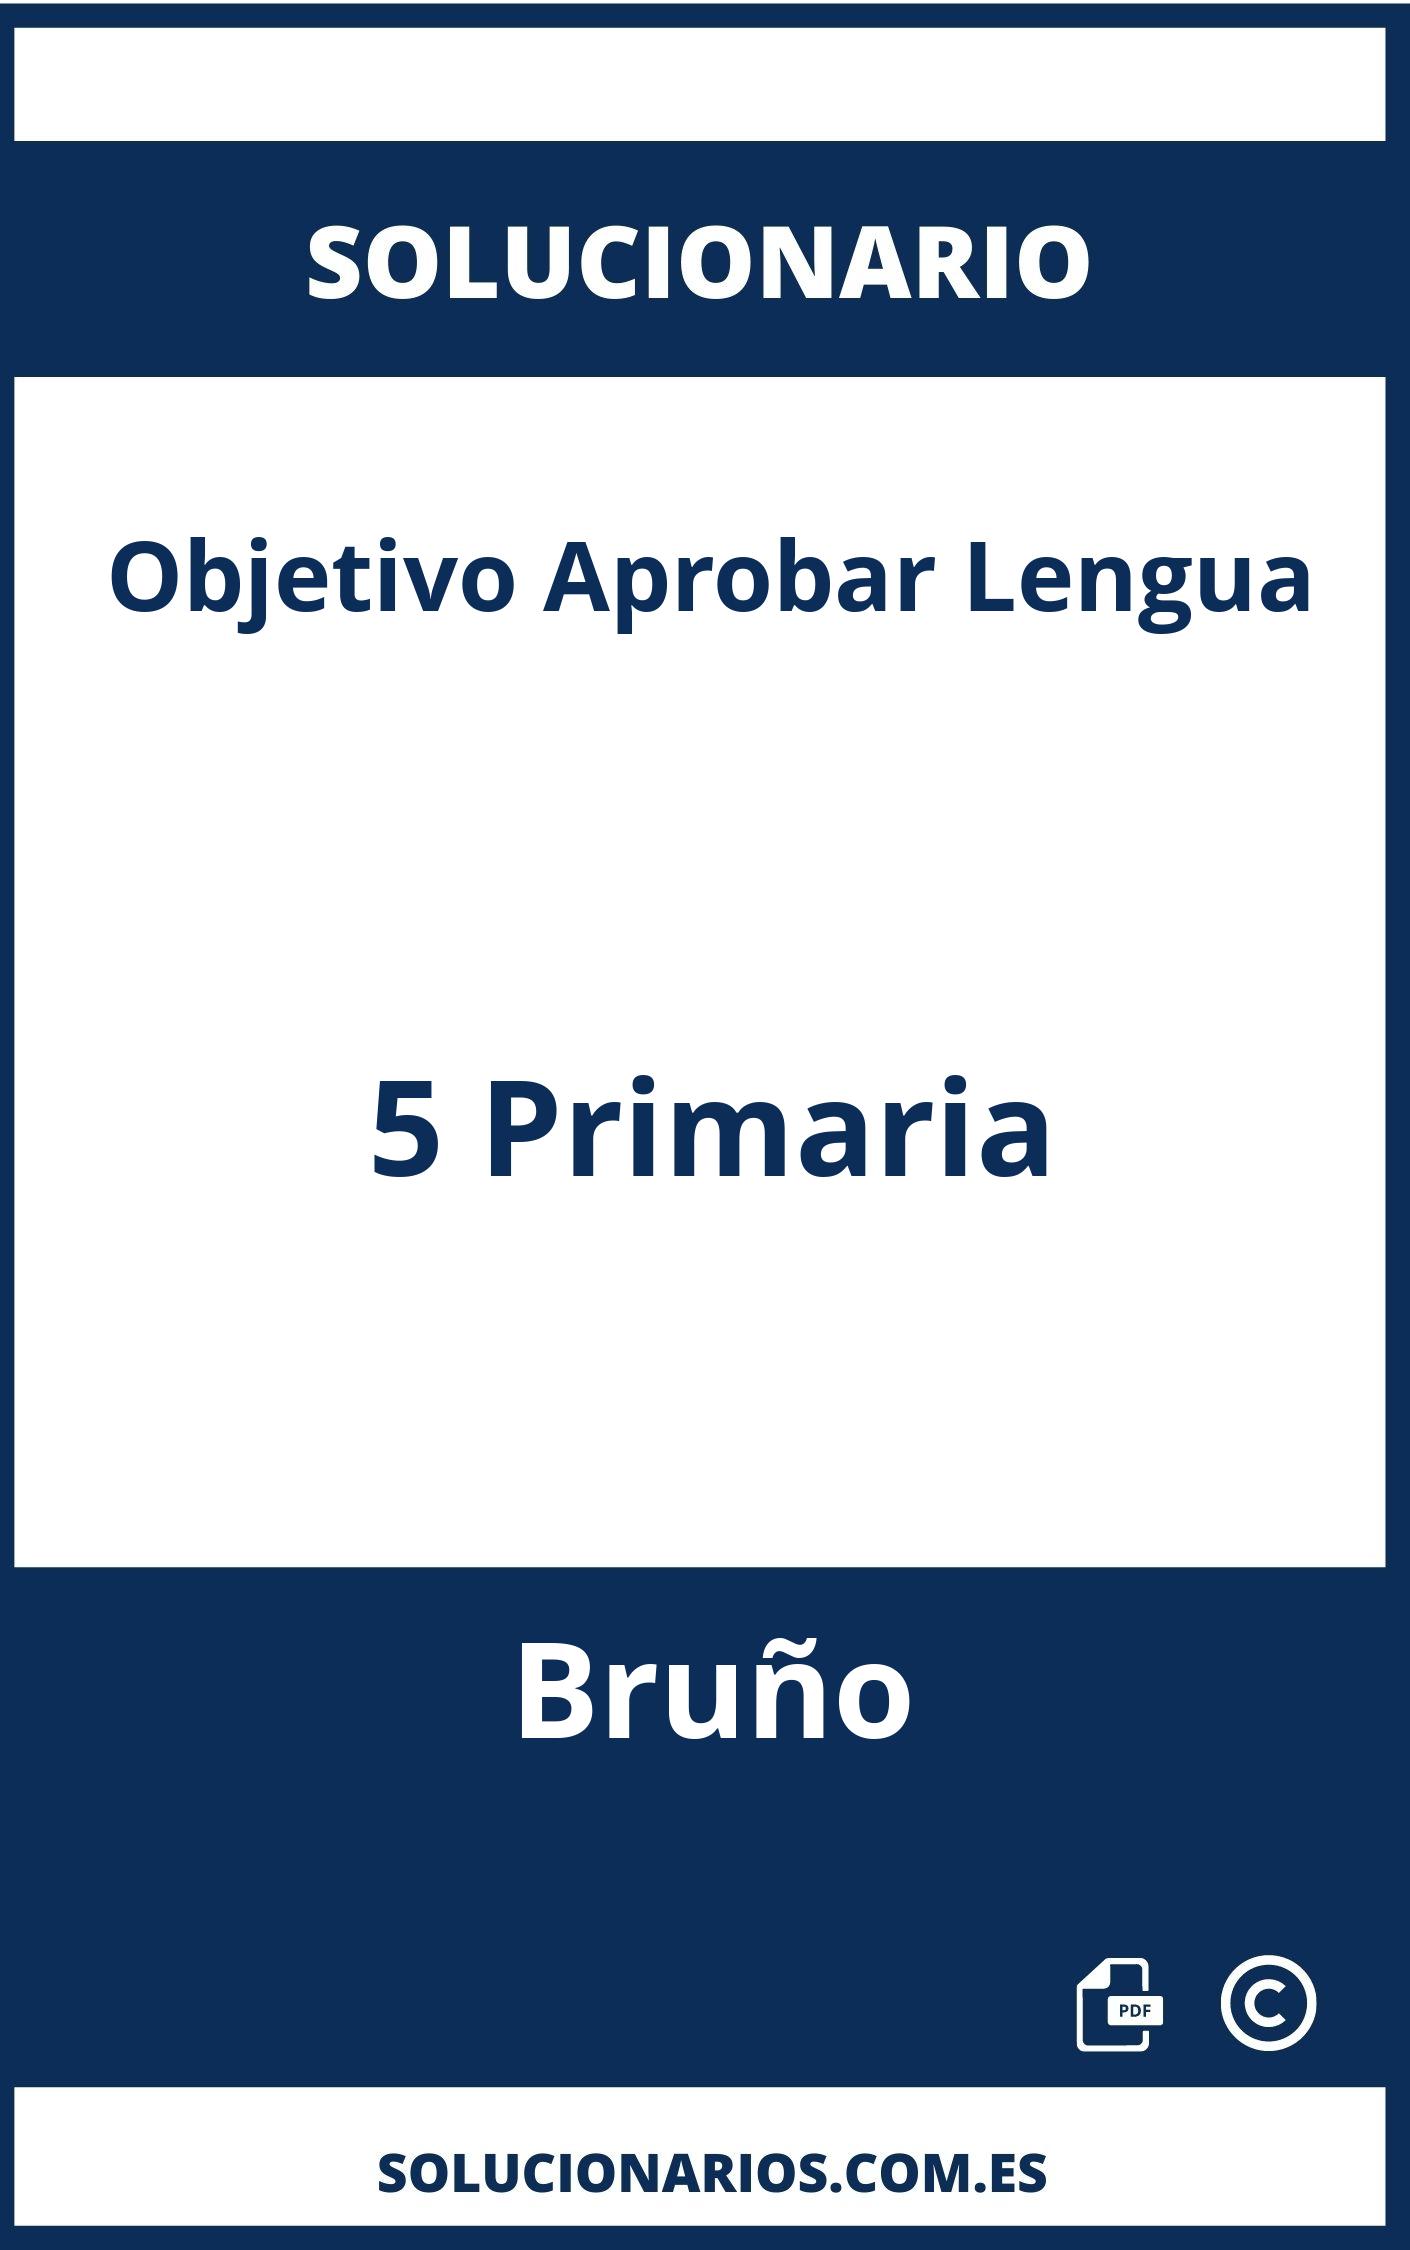 Solucionario Objetivo Aprobar Lengua 5 Primaria Bruño